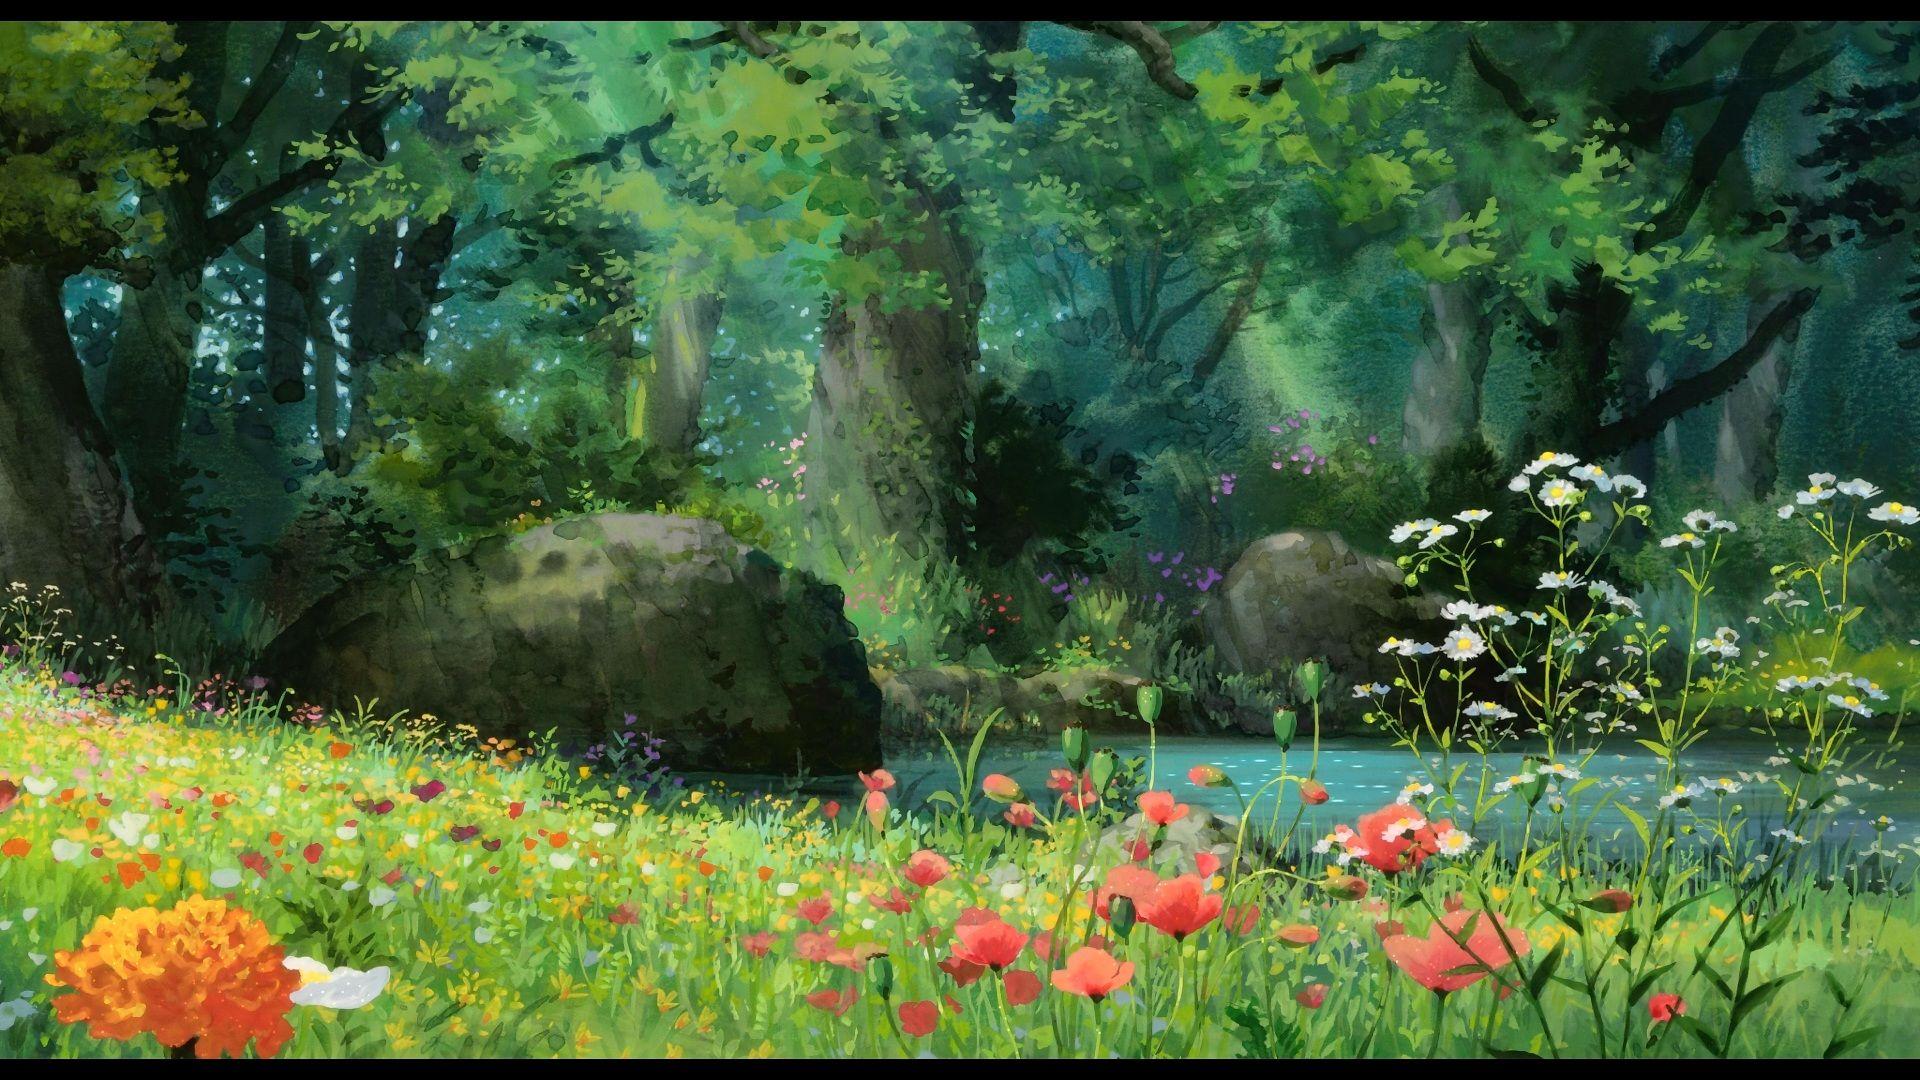 Floresta - Other & Anime Background Wallpapers on Desktop Nexus